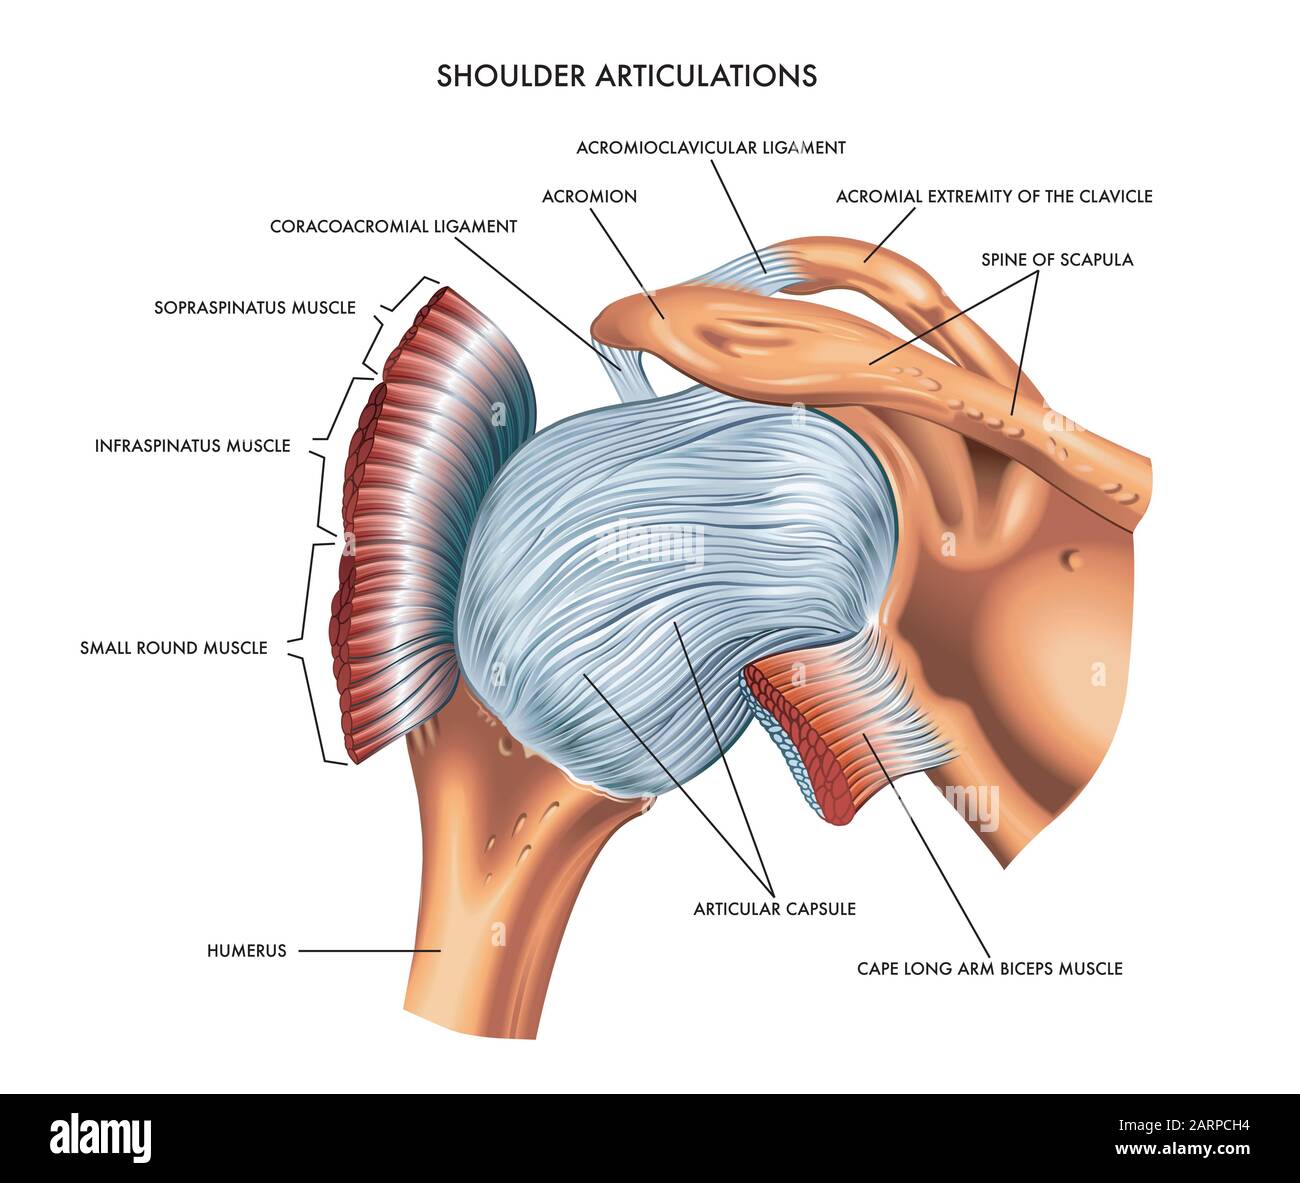 A detailed medical illustration of shoulder articulations. Stock Photo